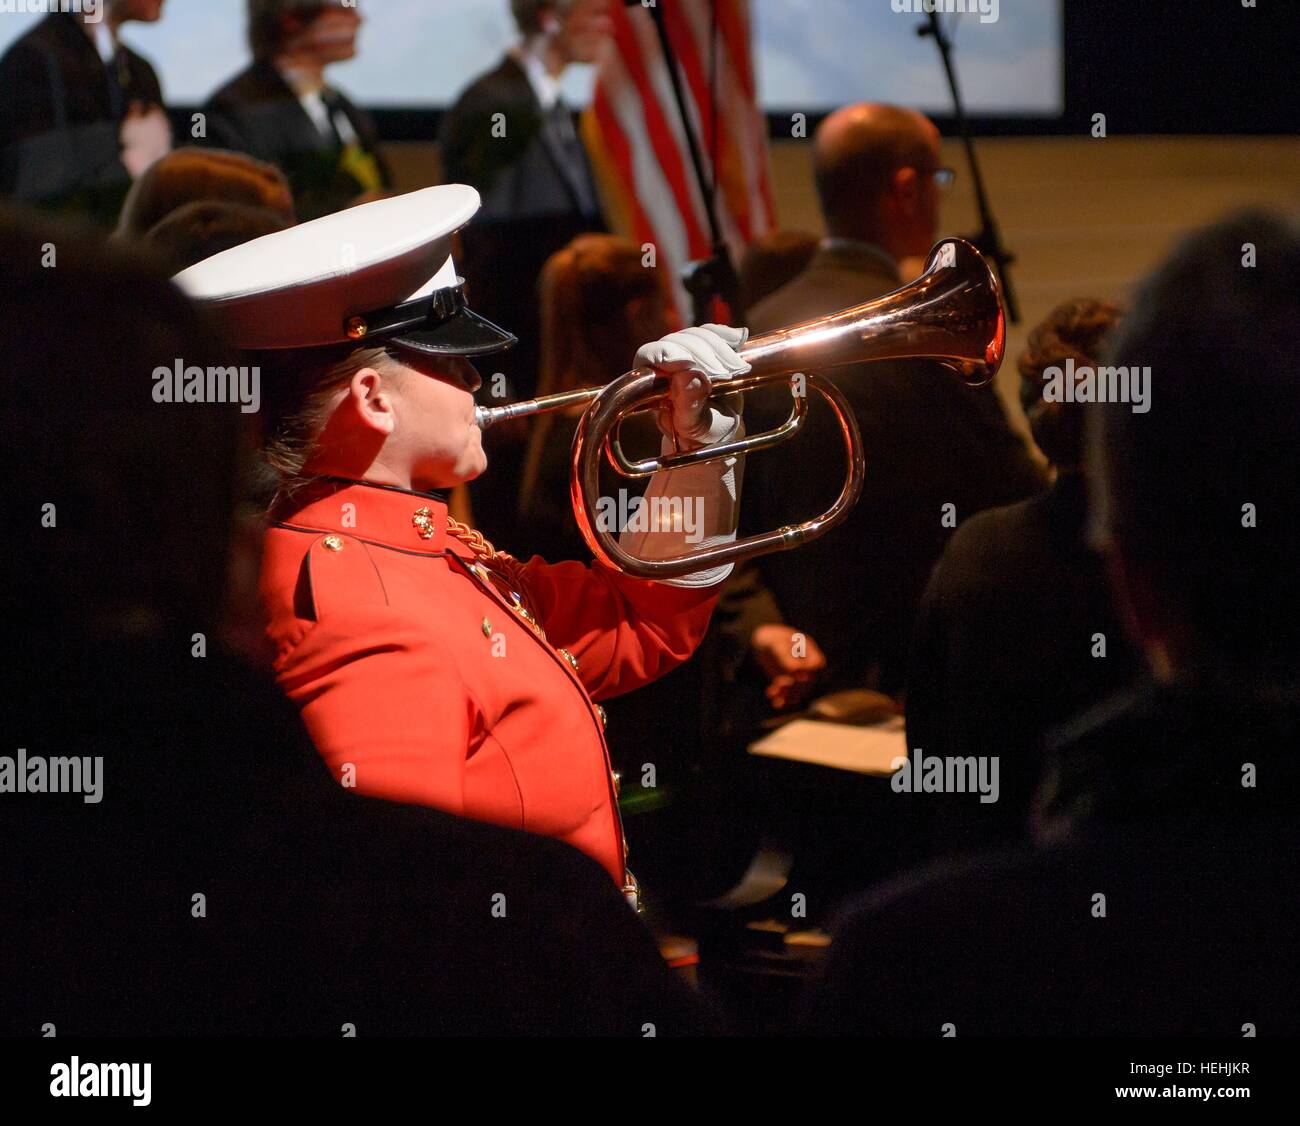 A U.S. Marine soldier plays Taps on a bugle during the memorial service celebrating the life of former NASA astronaut and U.S. Senator John Glenn at the Ohio State University Mershon Auditorium December 17, 2016 in Columbus, Ohio. Stock Photo